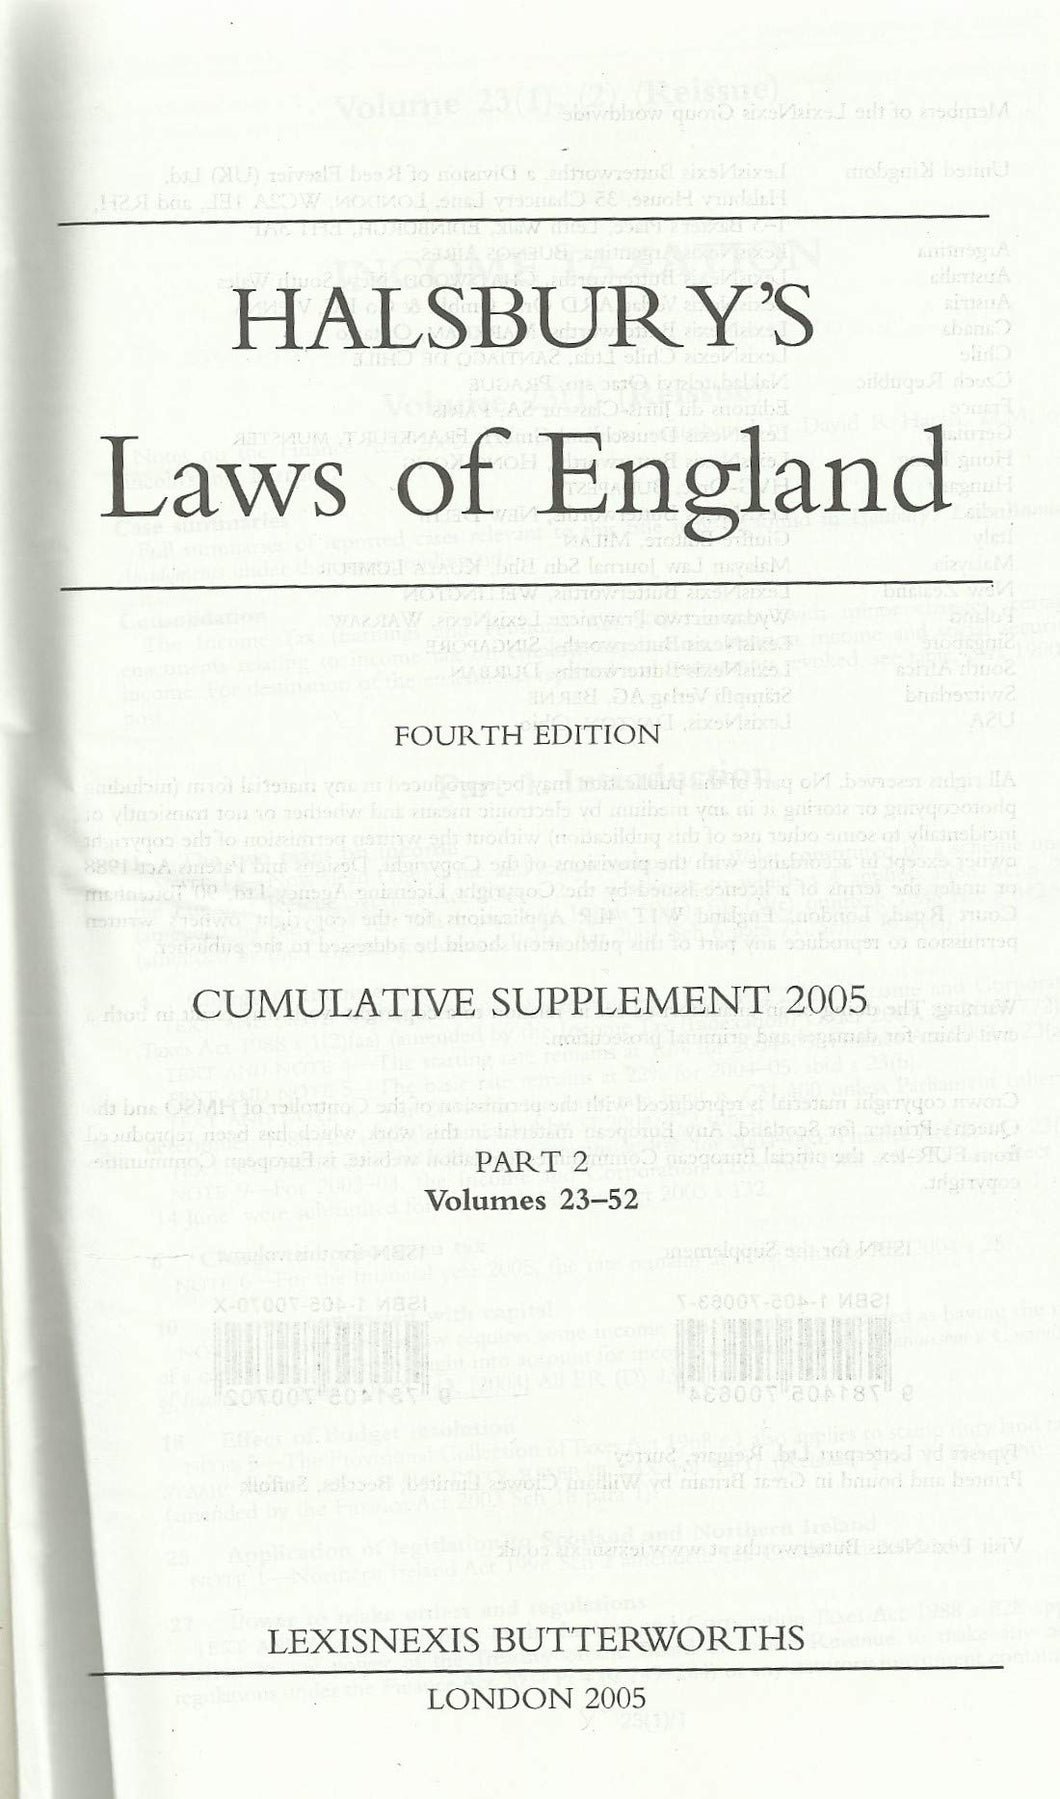 Halsbury's Laws of England - Fourth Edition, 2005 Cumulative Supplement - Part 2, Volume 23-52